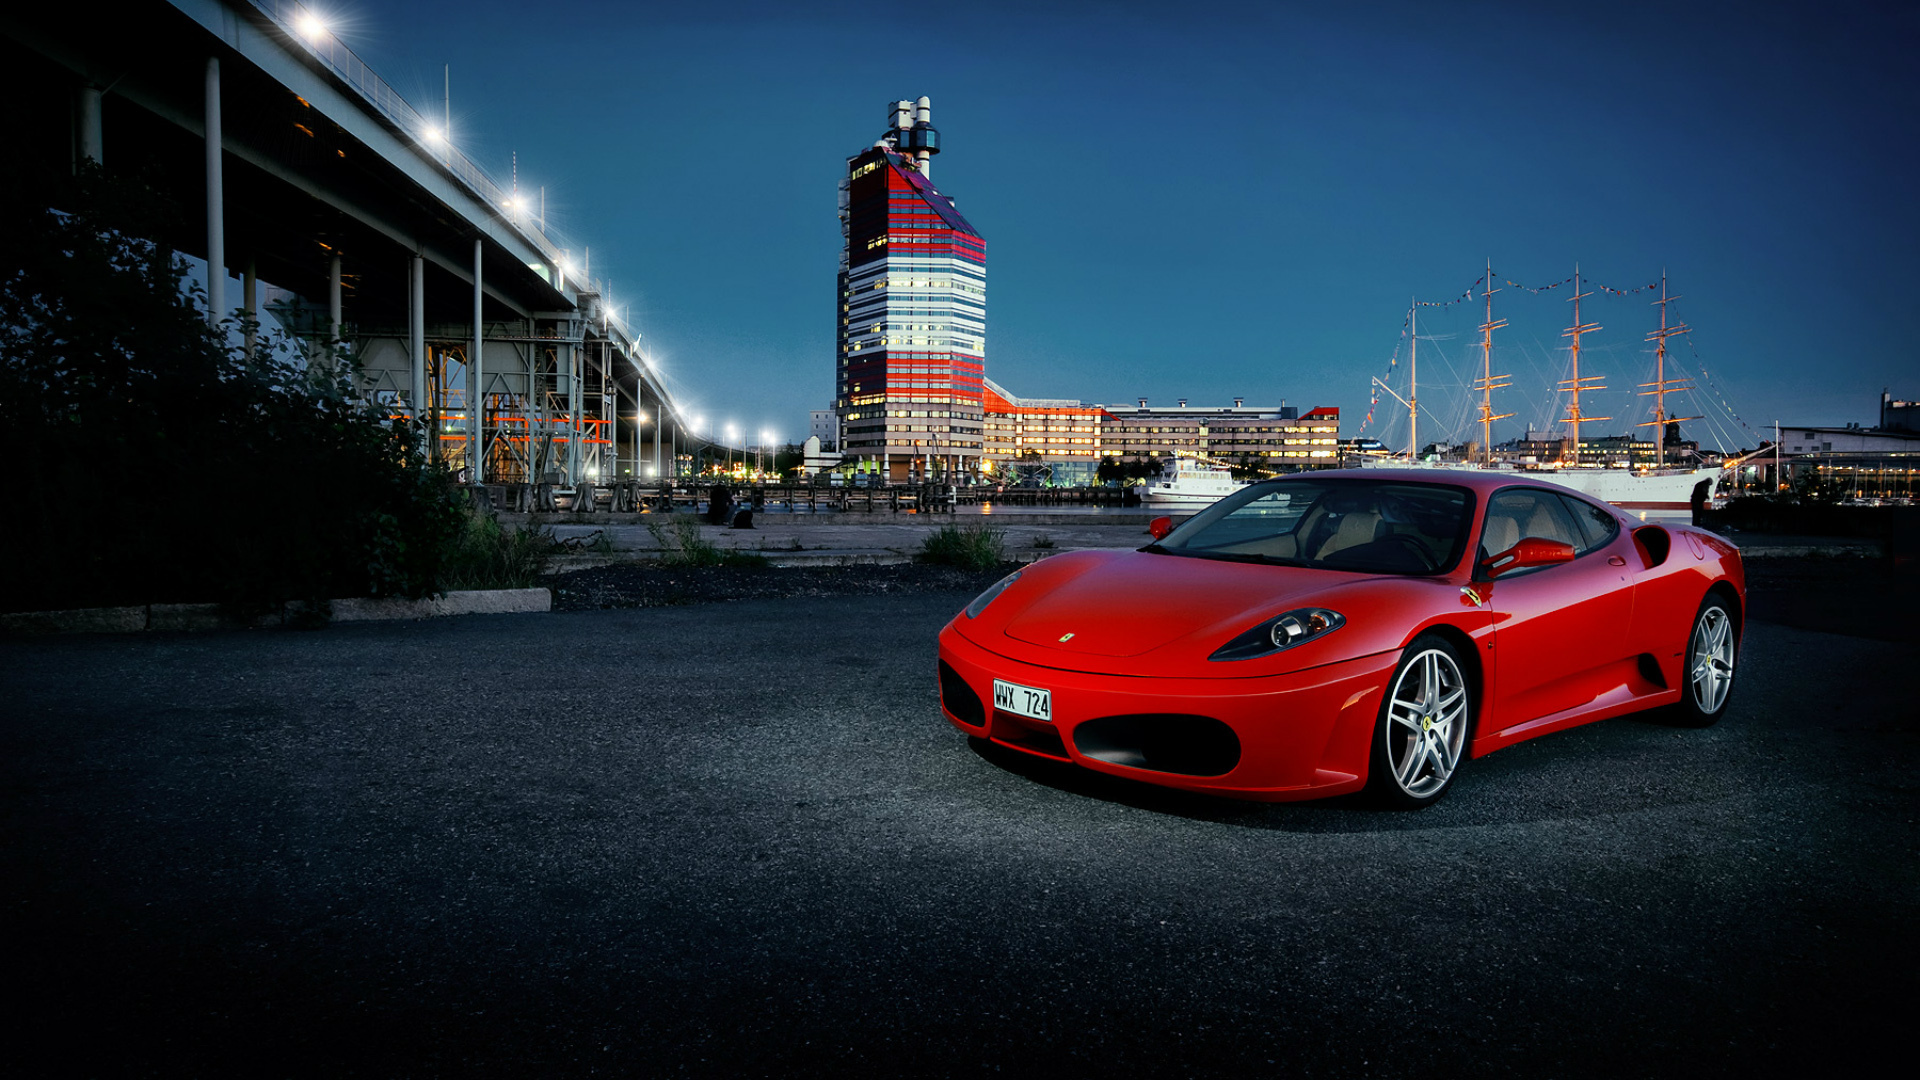 Ferrari F40 Wallpaper Image